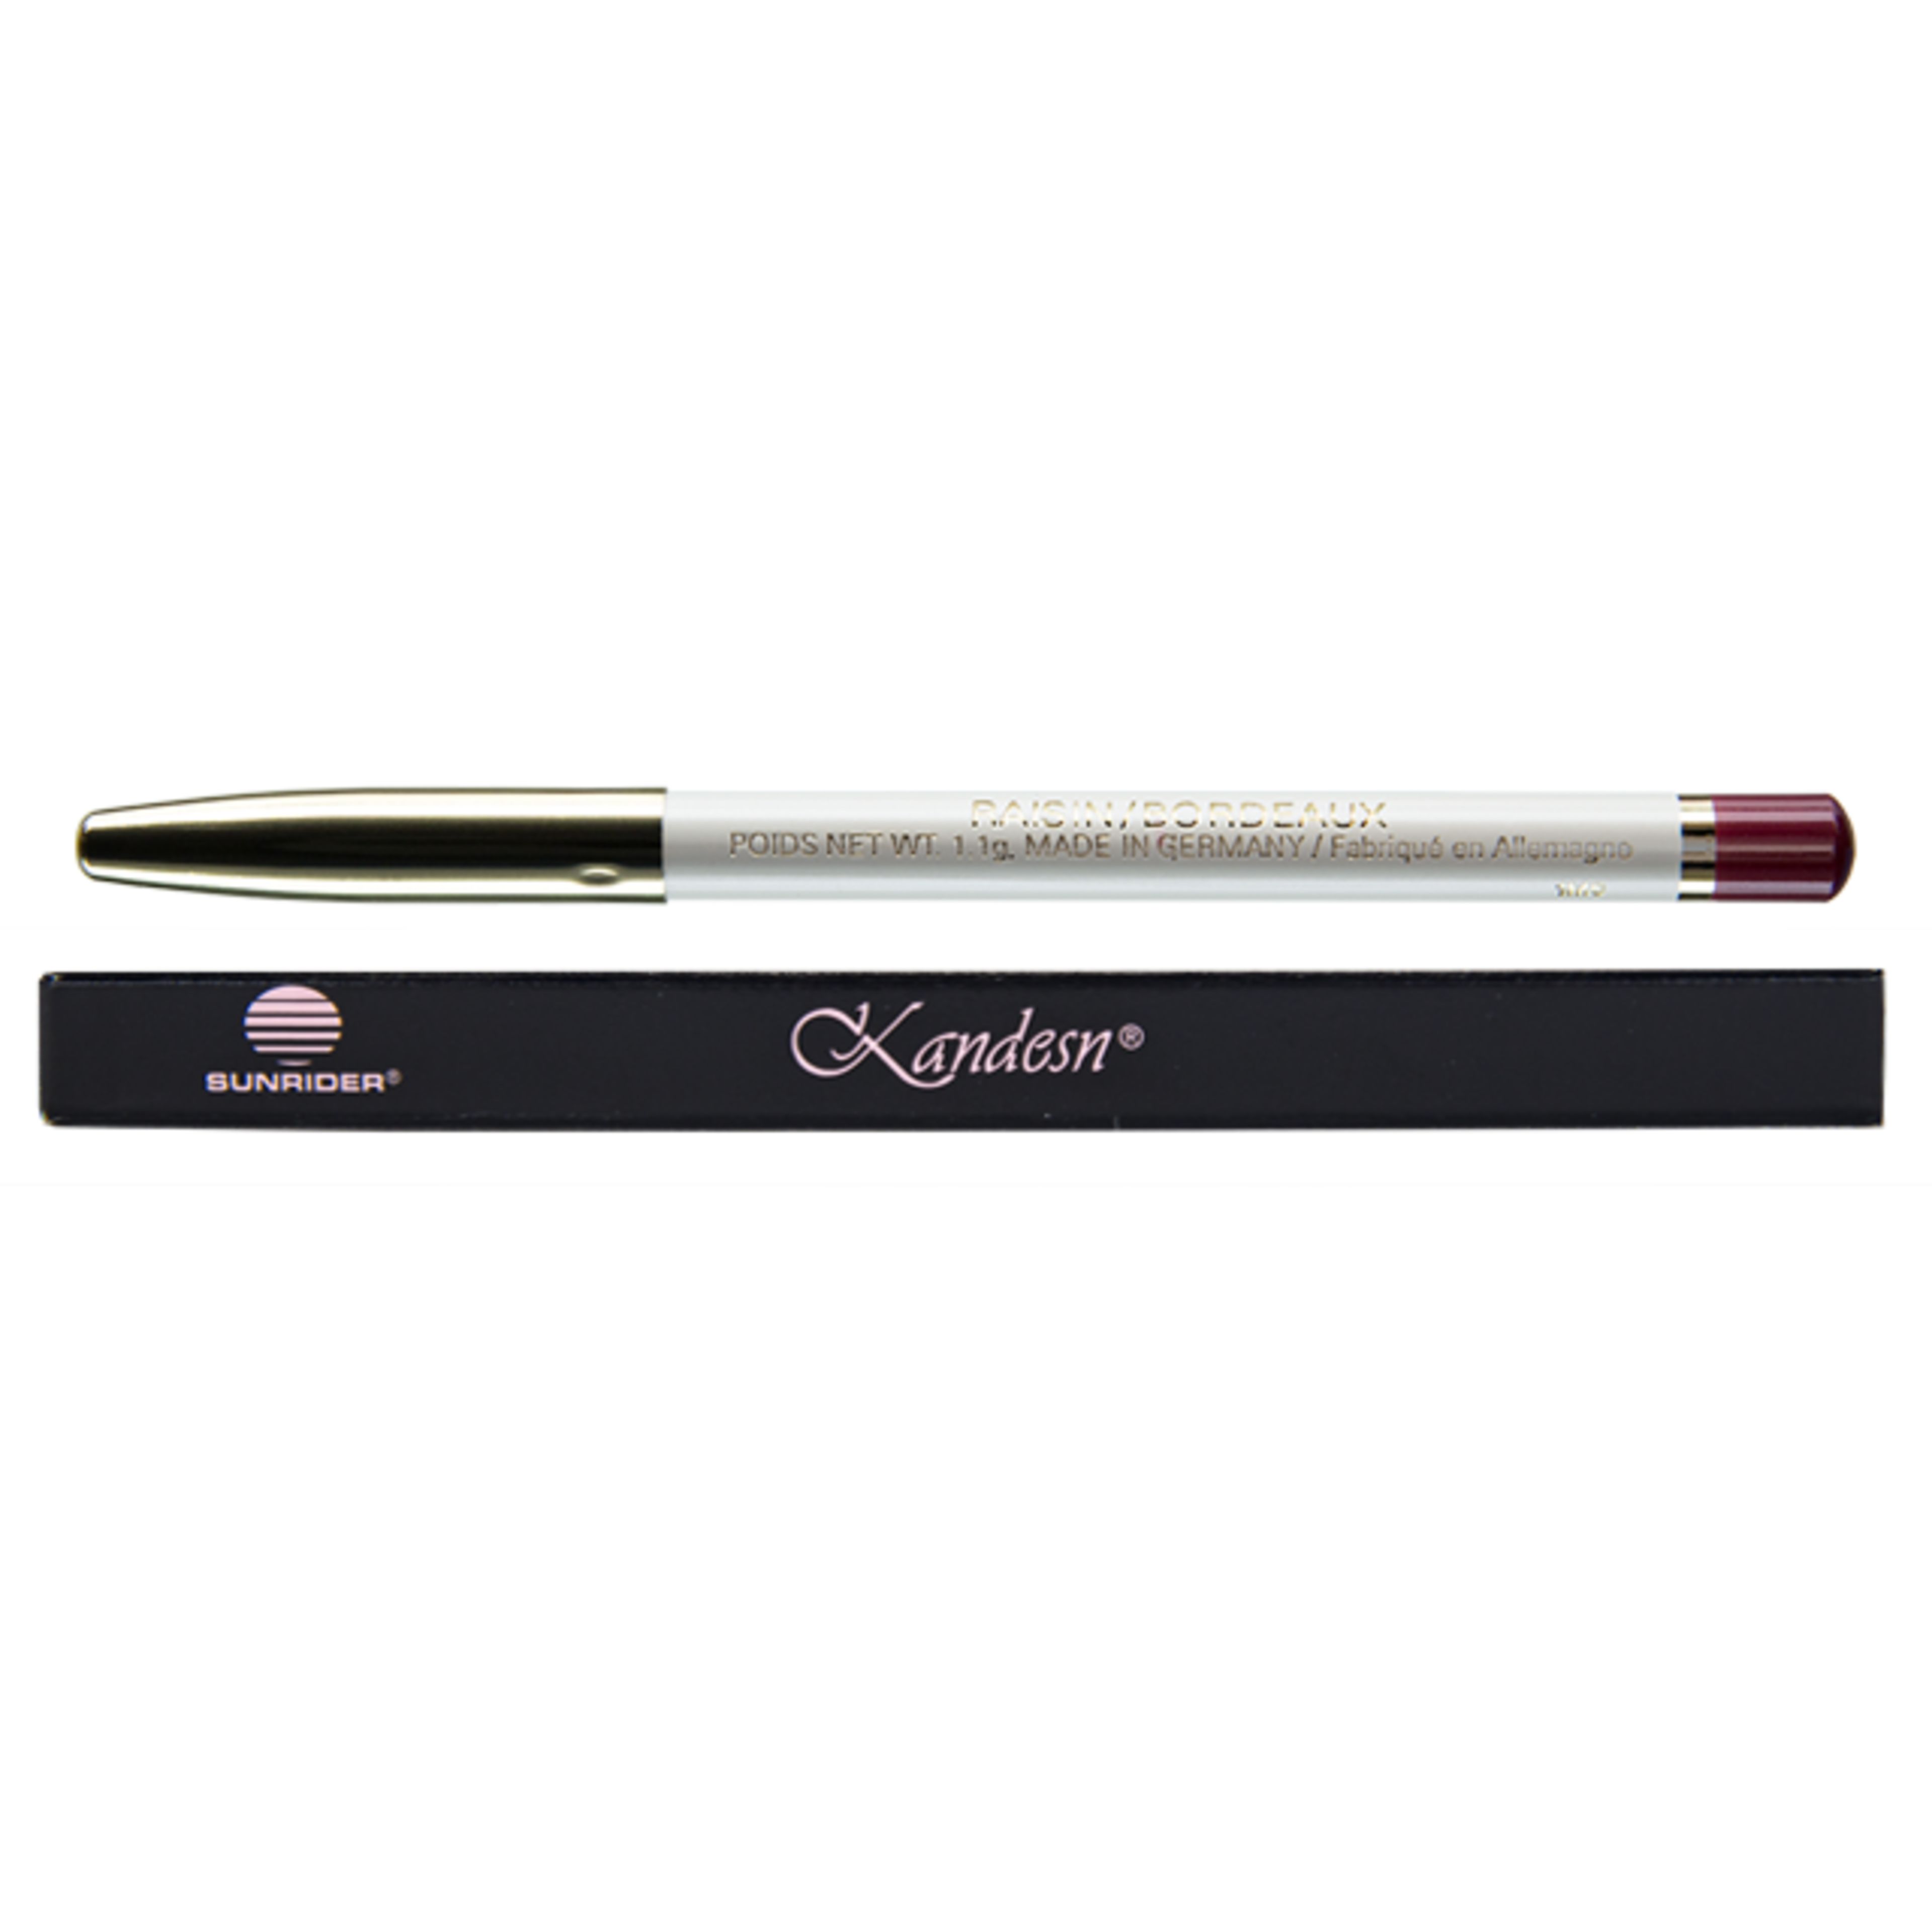 Kandesn® Lip Liner Pencil